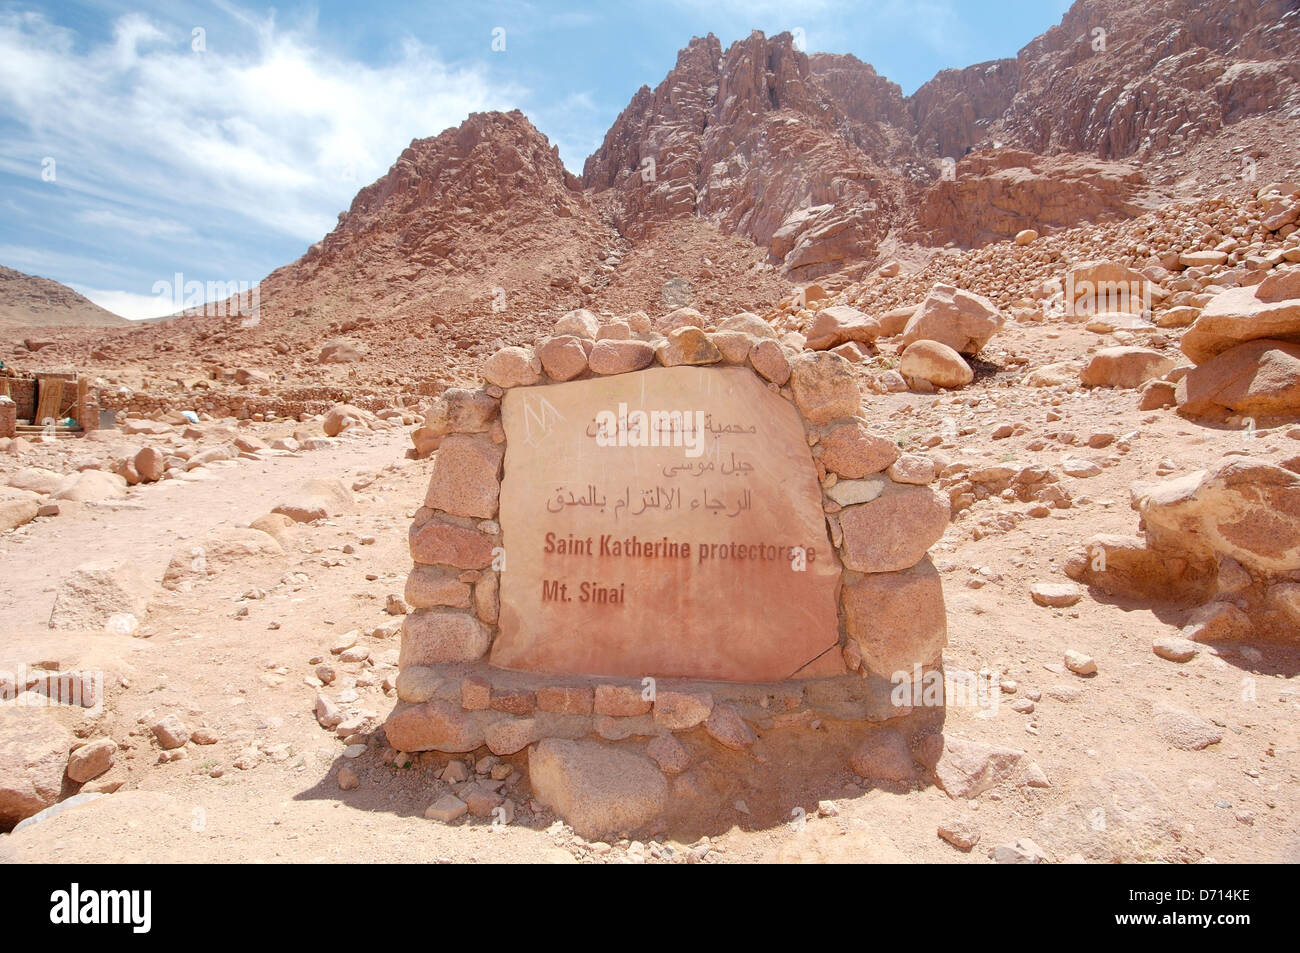 Eine steinerne Gedenktafel - St. Catherine-Protektorat, das Katharinenkloster (Saint Catherine Area), Sinai-Halbinsel, Ägypten Stockfoto